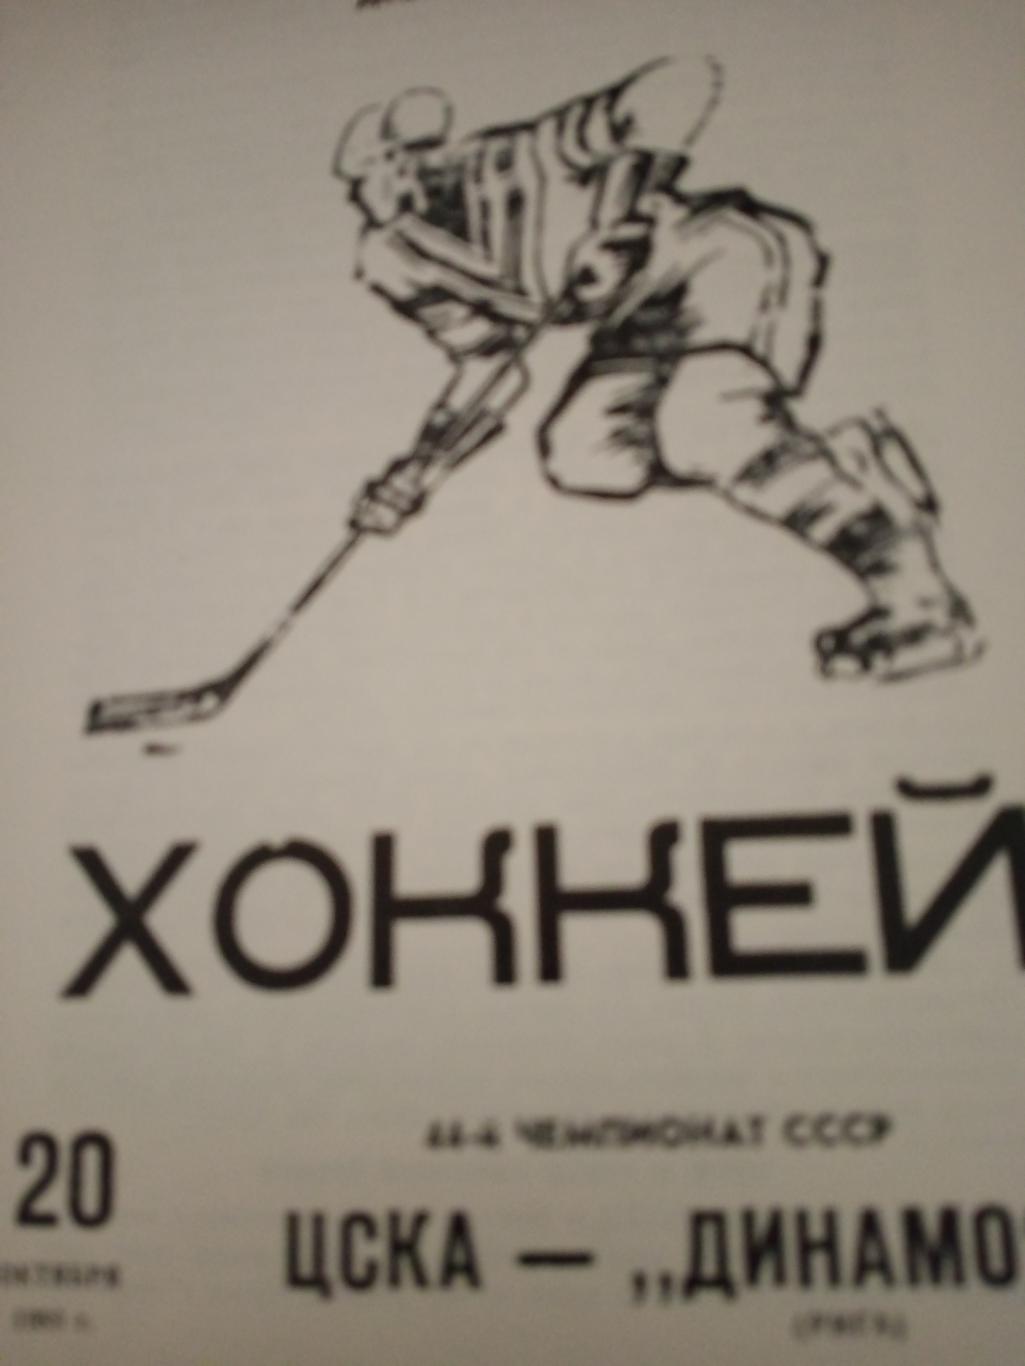 ЦСКА - Динамо Рига. 20 октября 1989 год